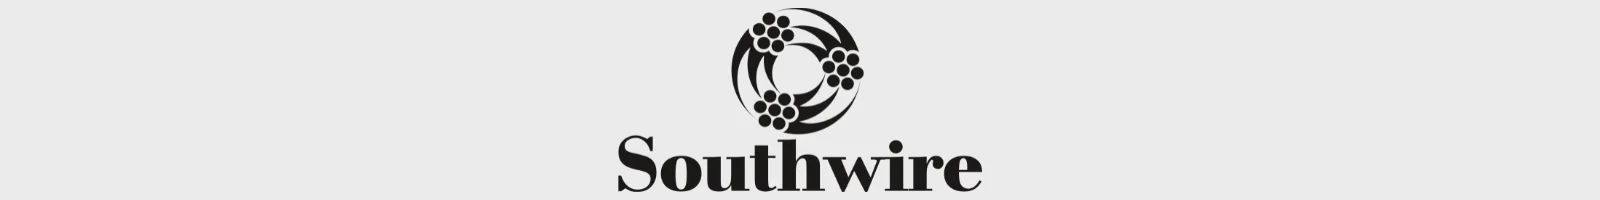 southwire logo